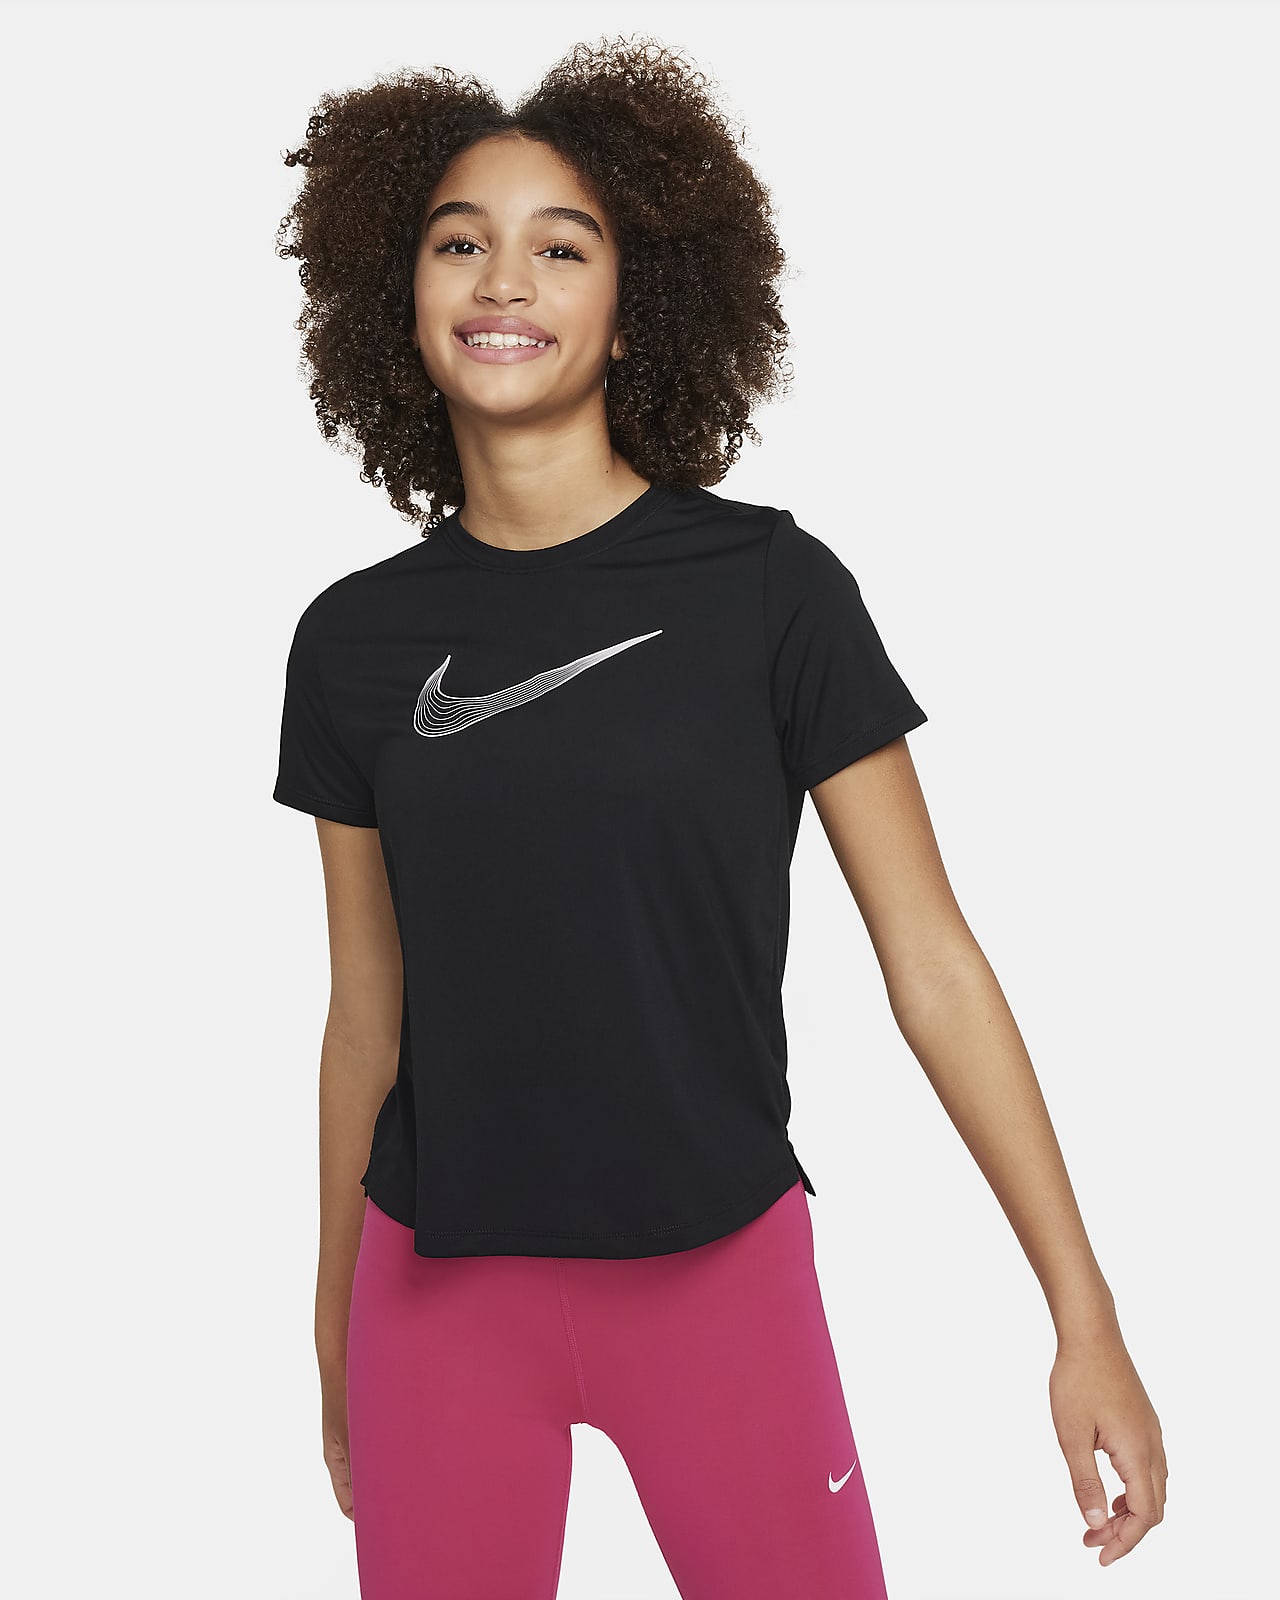 Nike Yoga Dri-FIT Big Kids' (Girls') Pants (Extended Size)